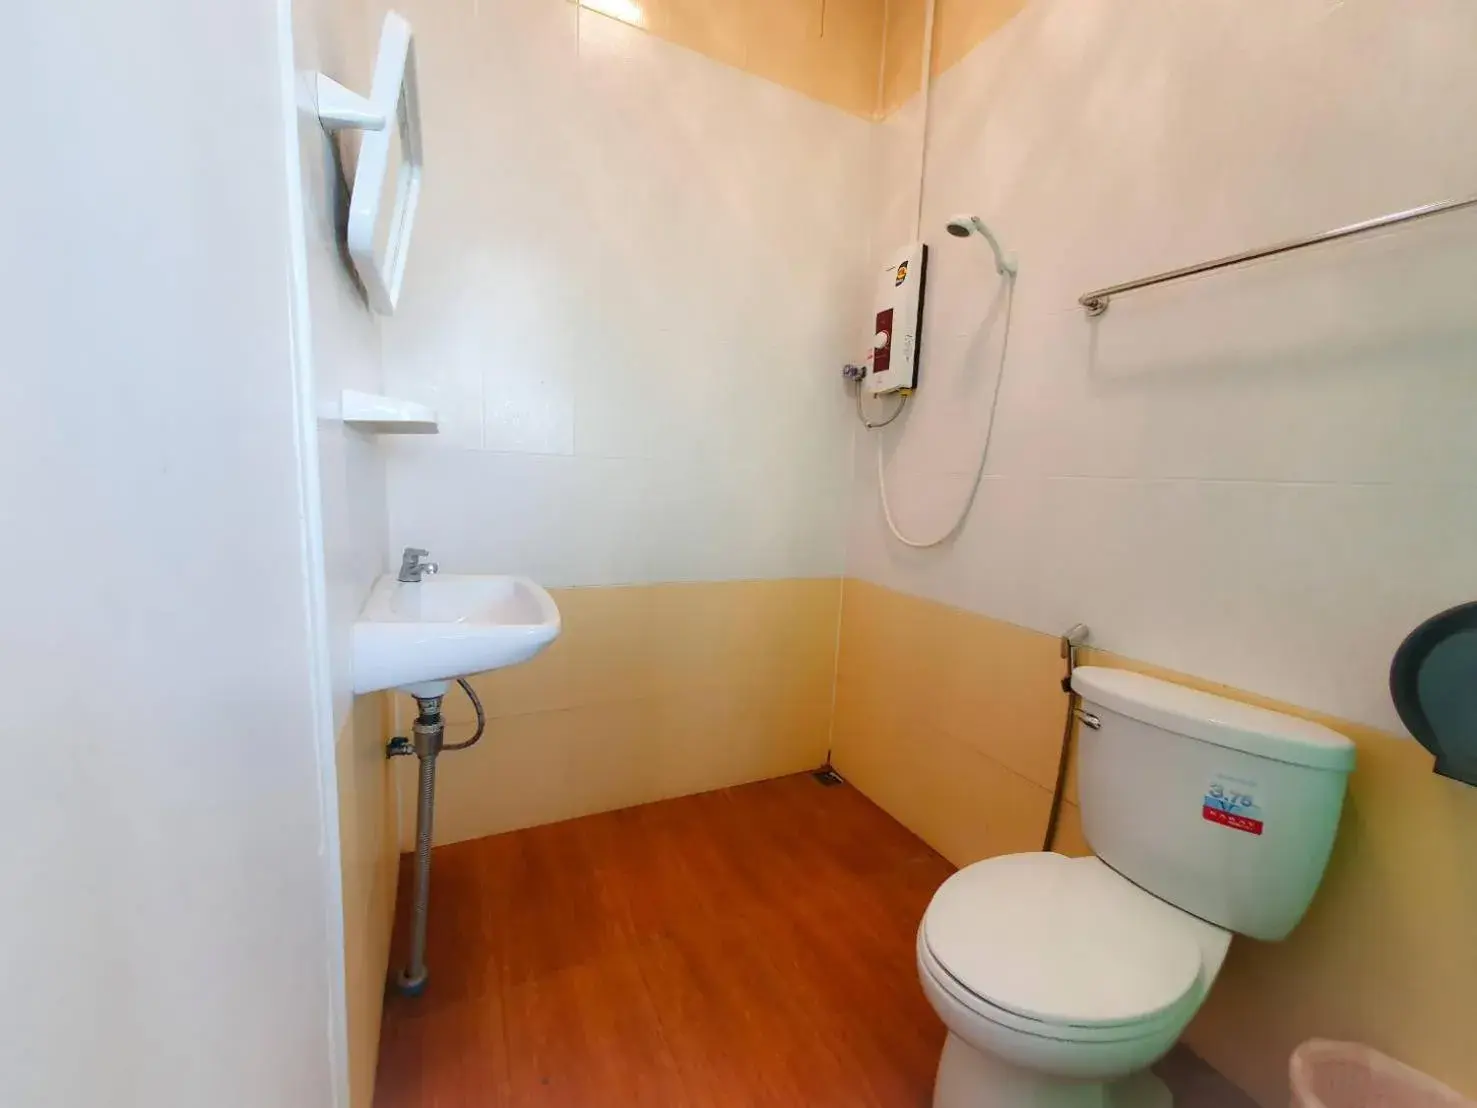 Bathroom in Dreampark resort